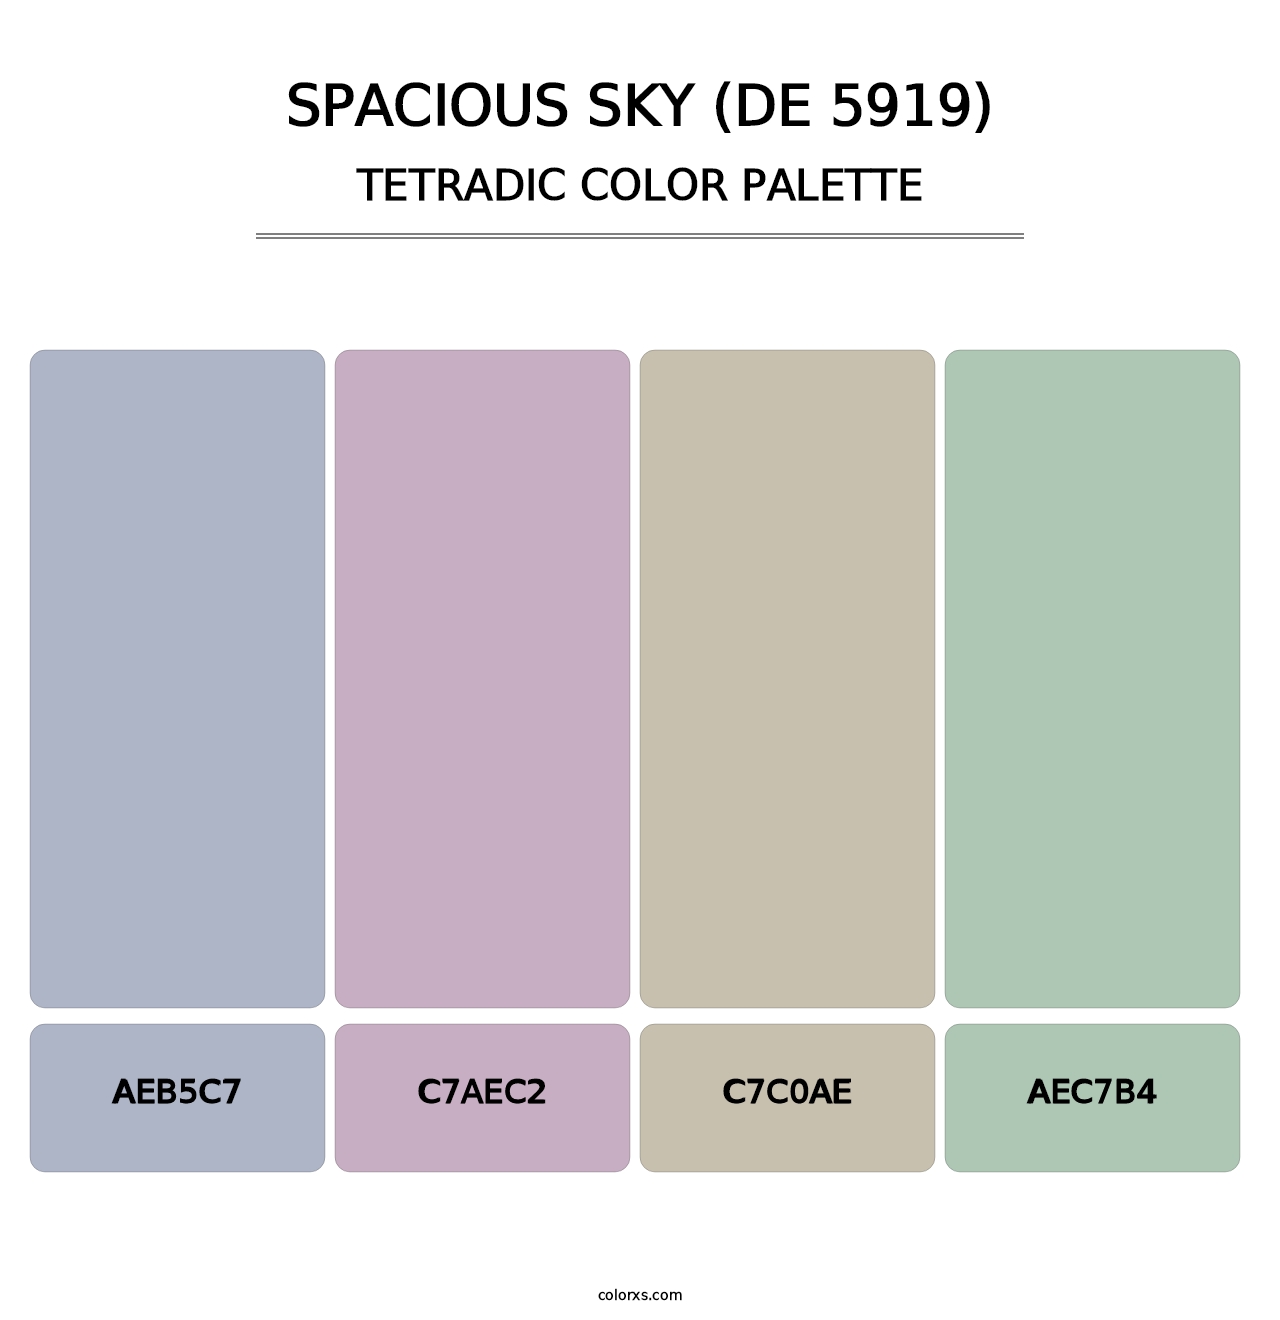 Spacious Sky (DE 5919) - Tetradic Color Palette